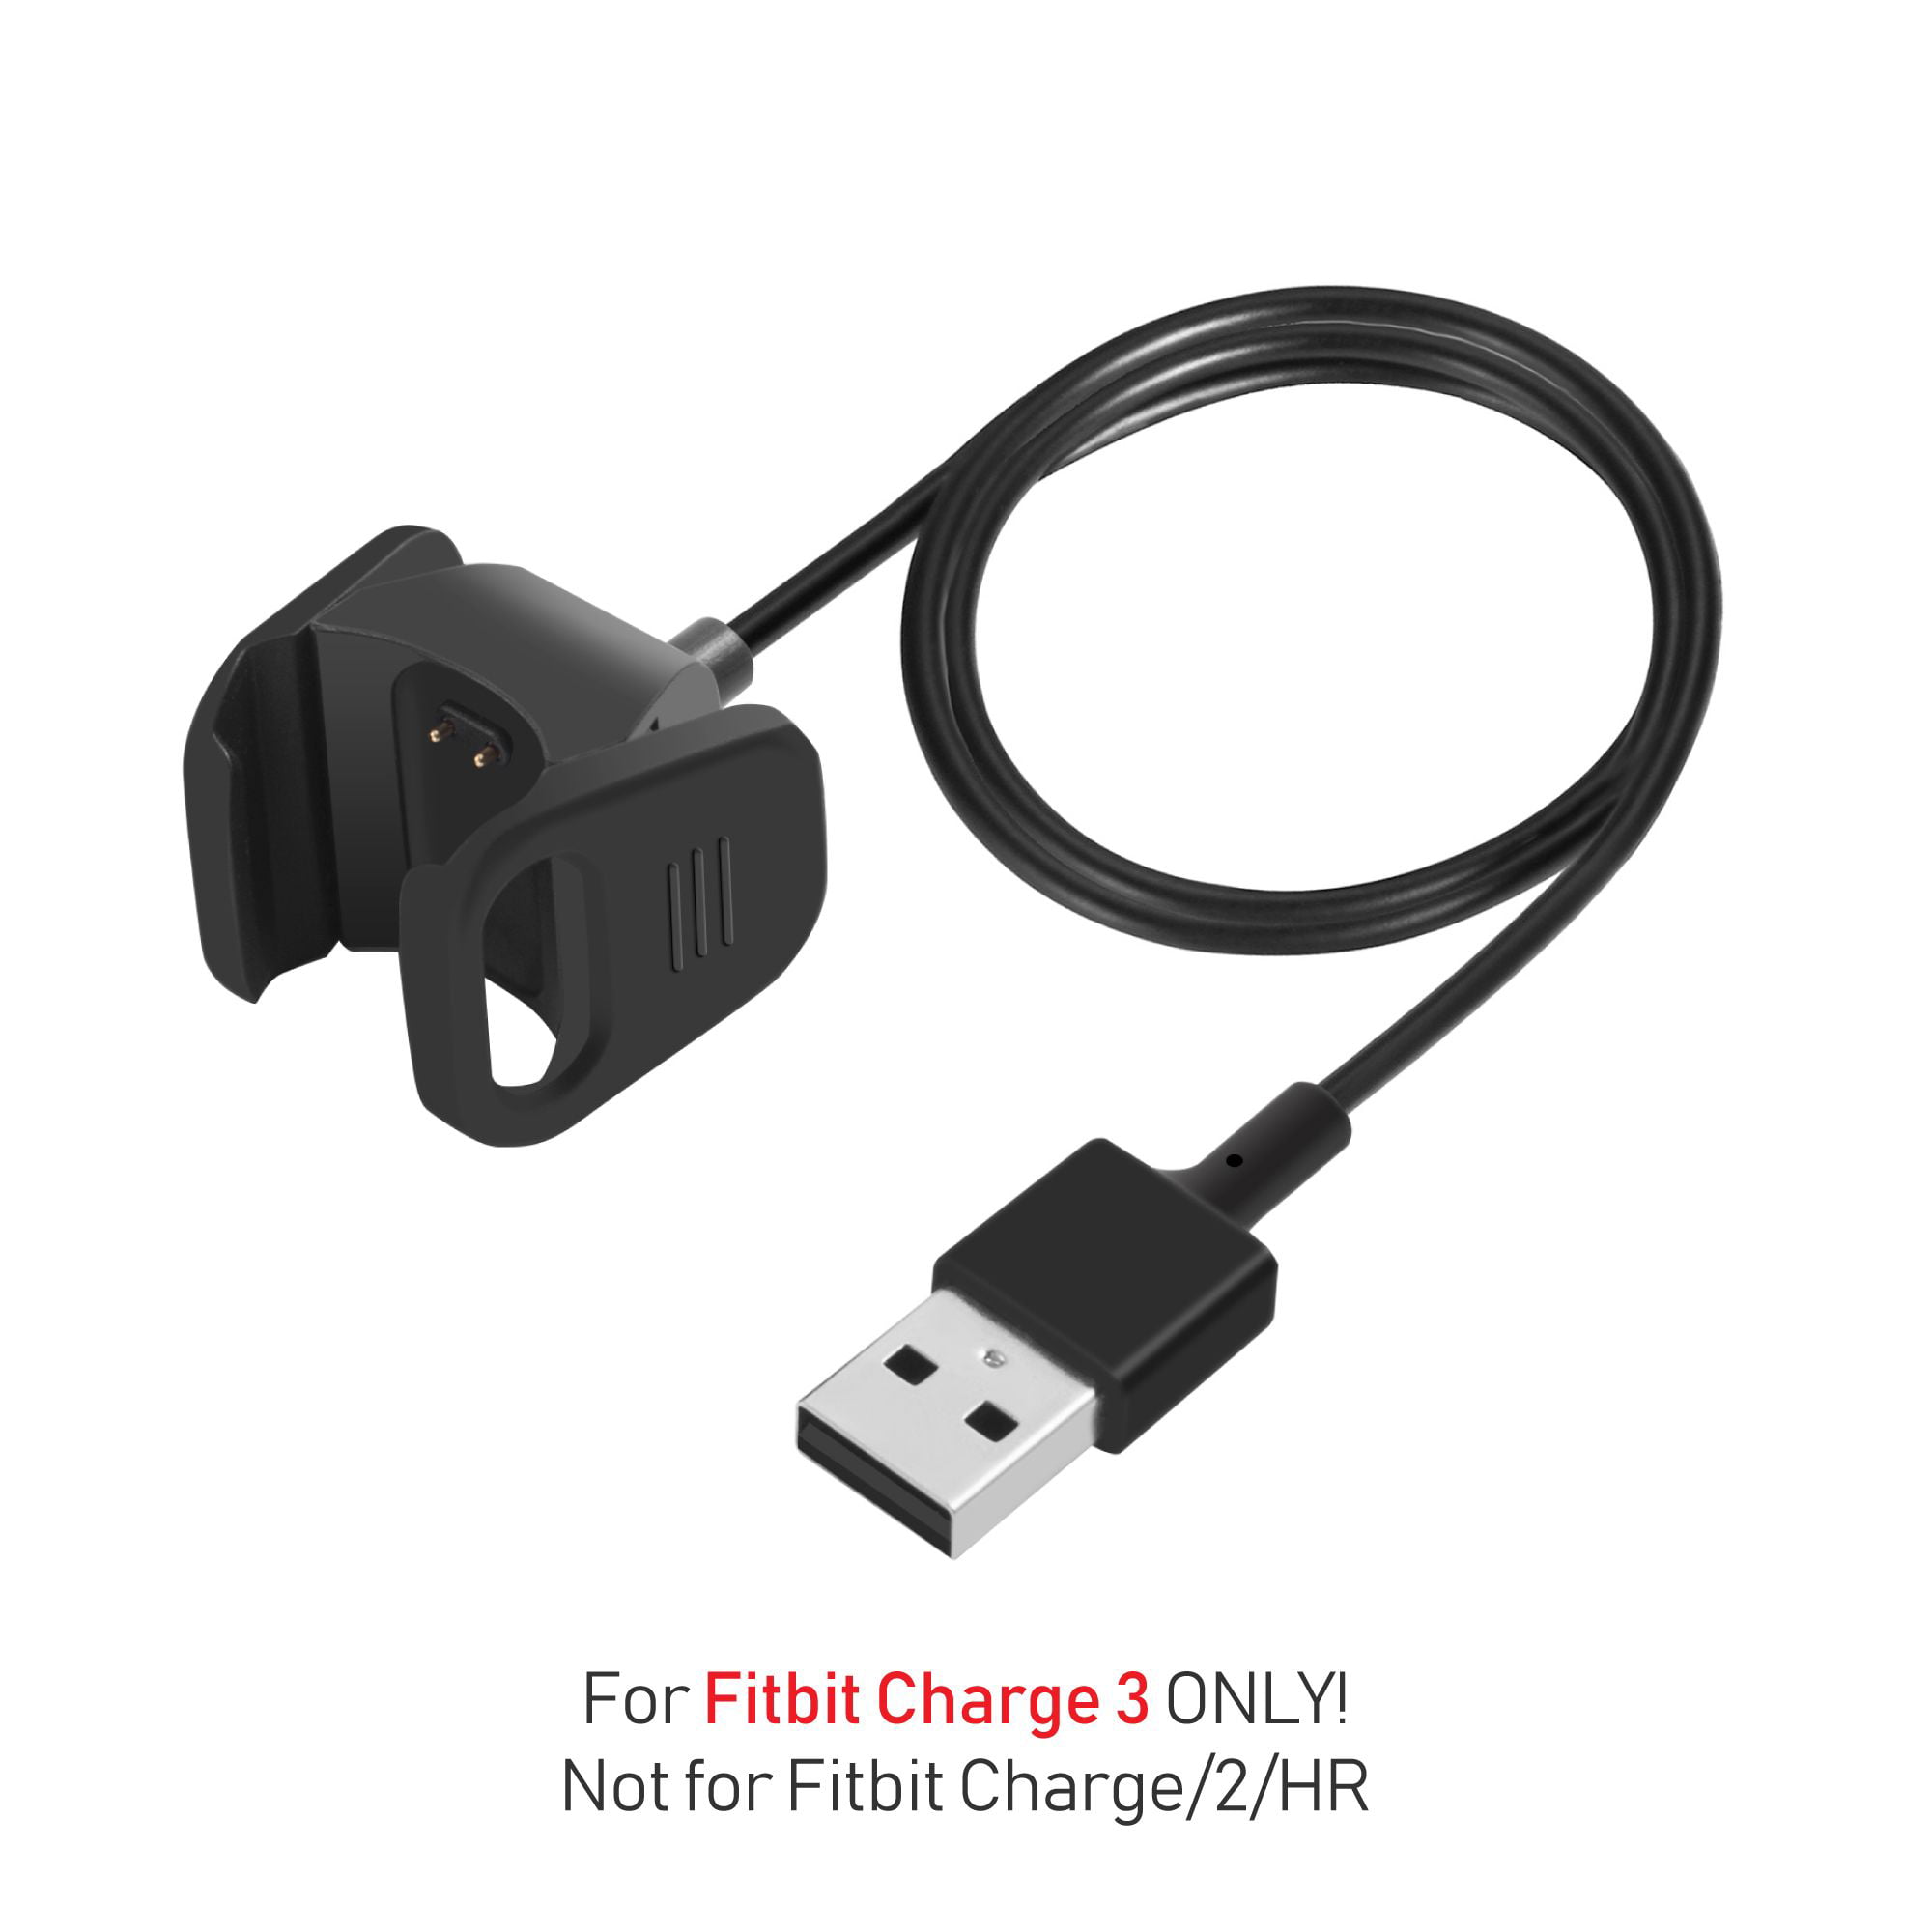 FB153FCC Black Original Fitbit Flex Replacement Charging Cable with USB 